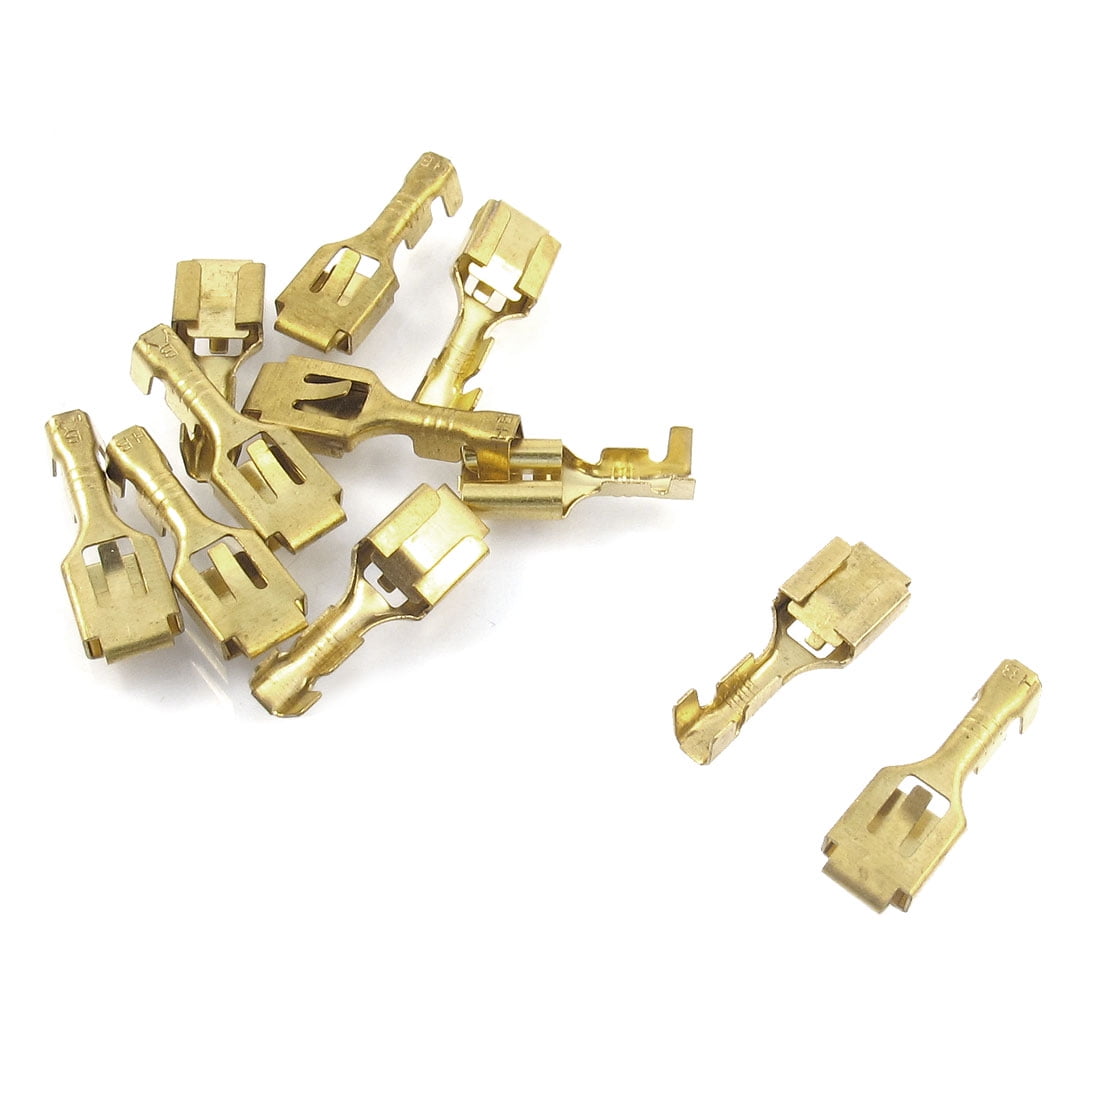 Brass 6.3mm Female Spade Crimp Terminals Connectors w/Clear Protect Case x 100 